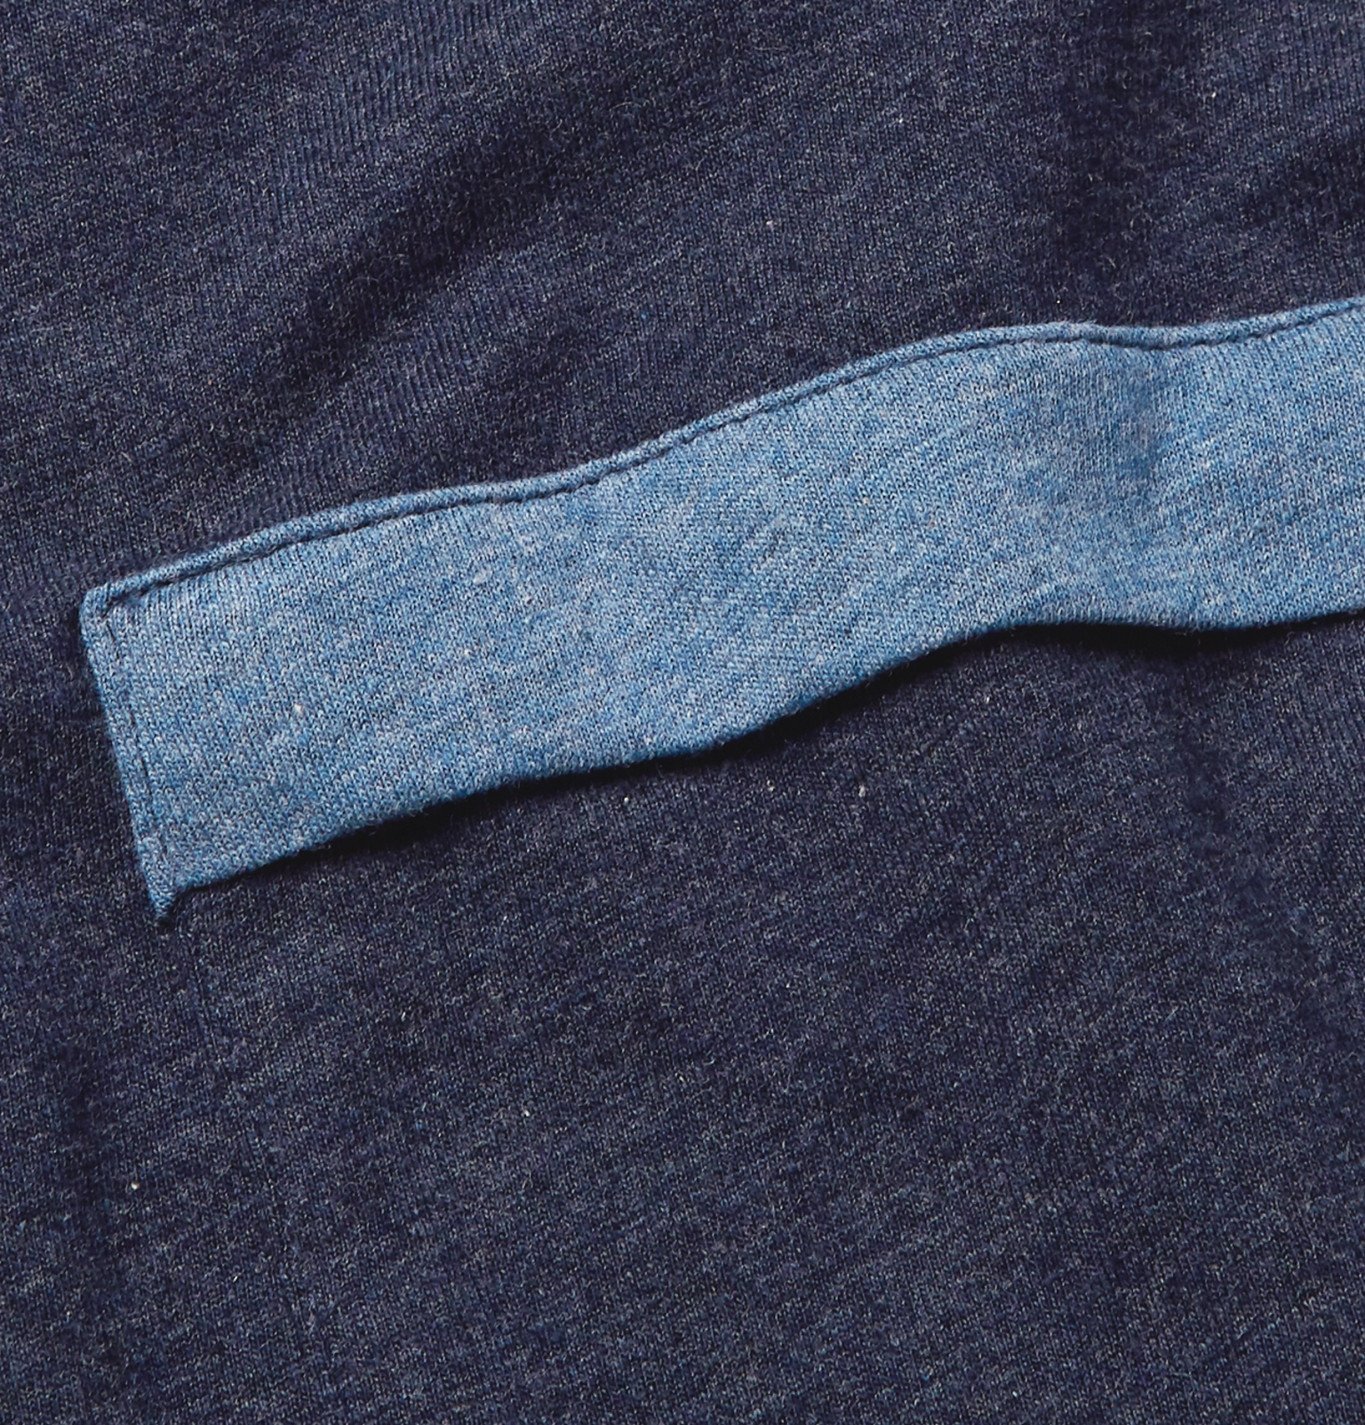 Oliver Spencer - Envelope Contrast-Tipped Cotton-Jersey T-Shirt - Blue